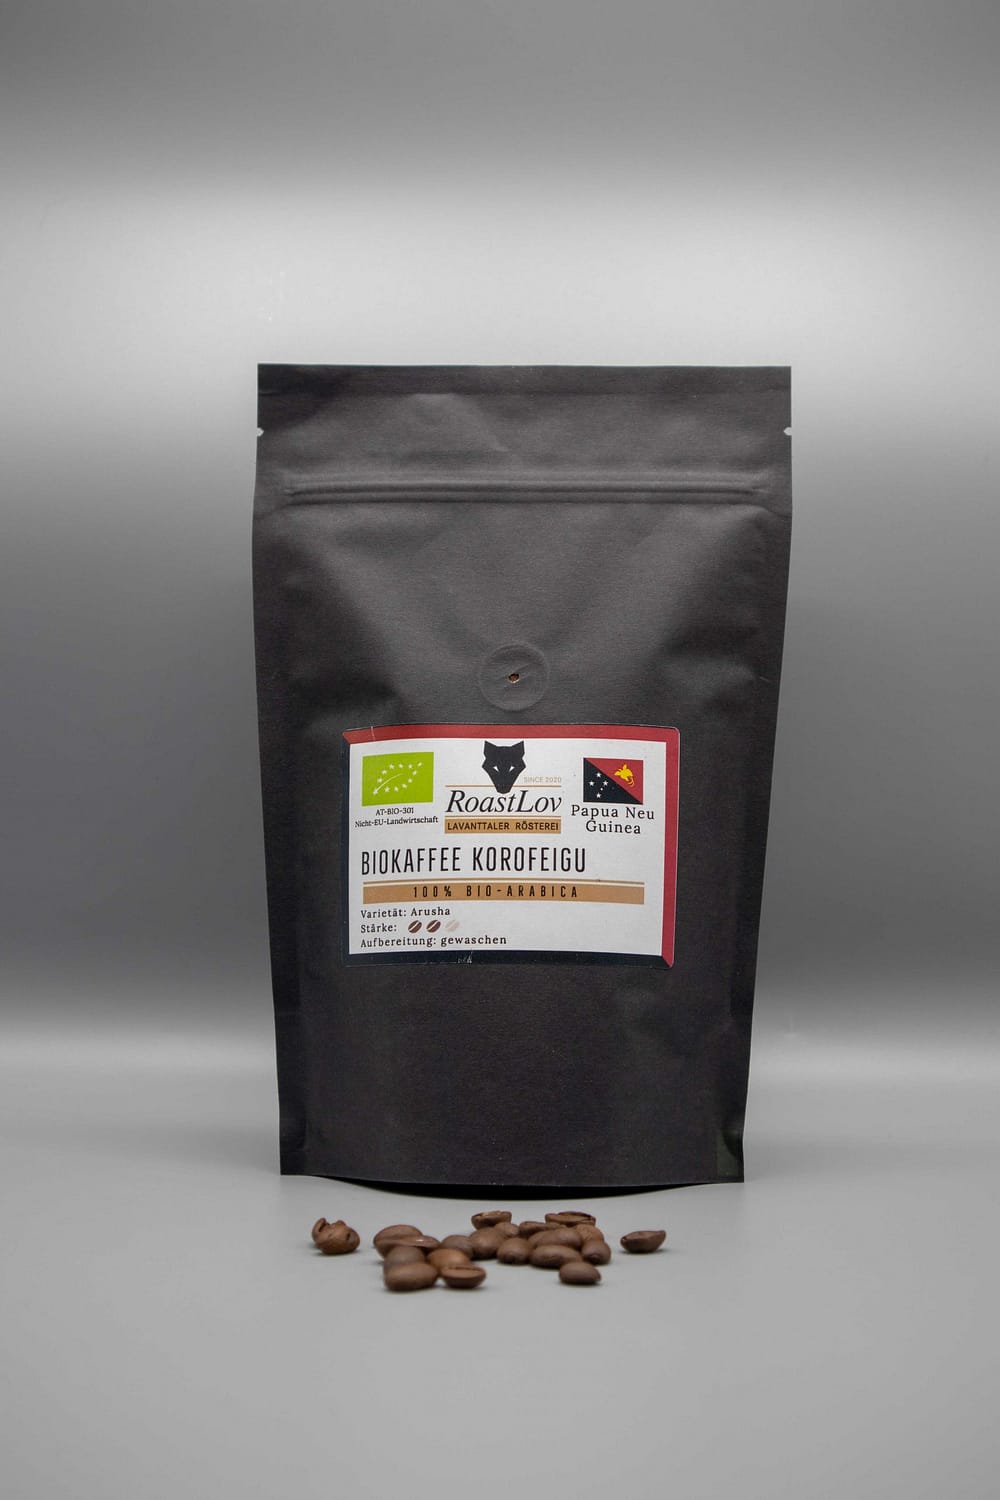 Bio Papua Neu Guinea Korofeigu Kaffee RoastLov